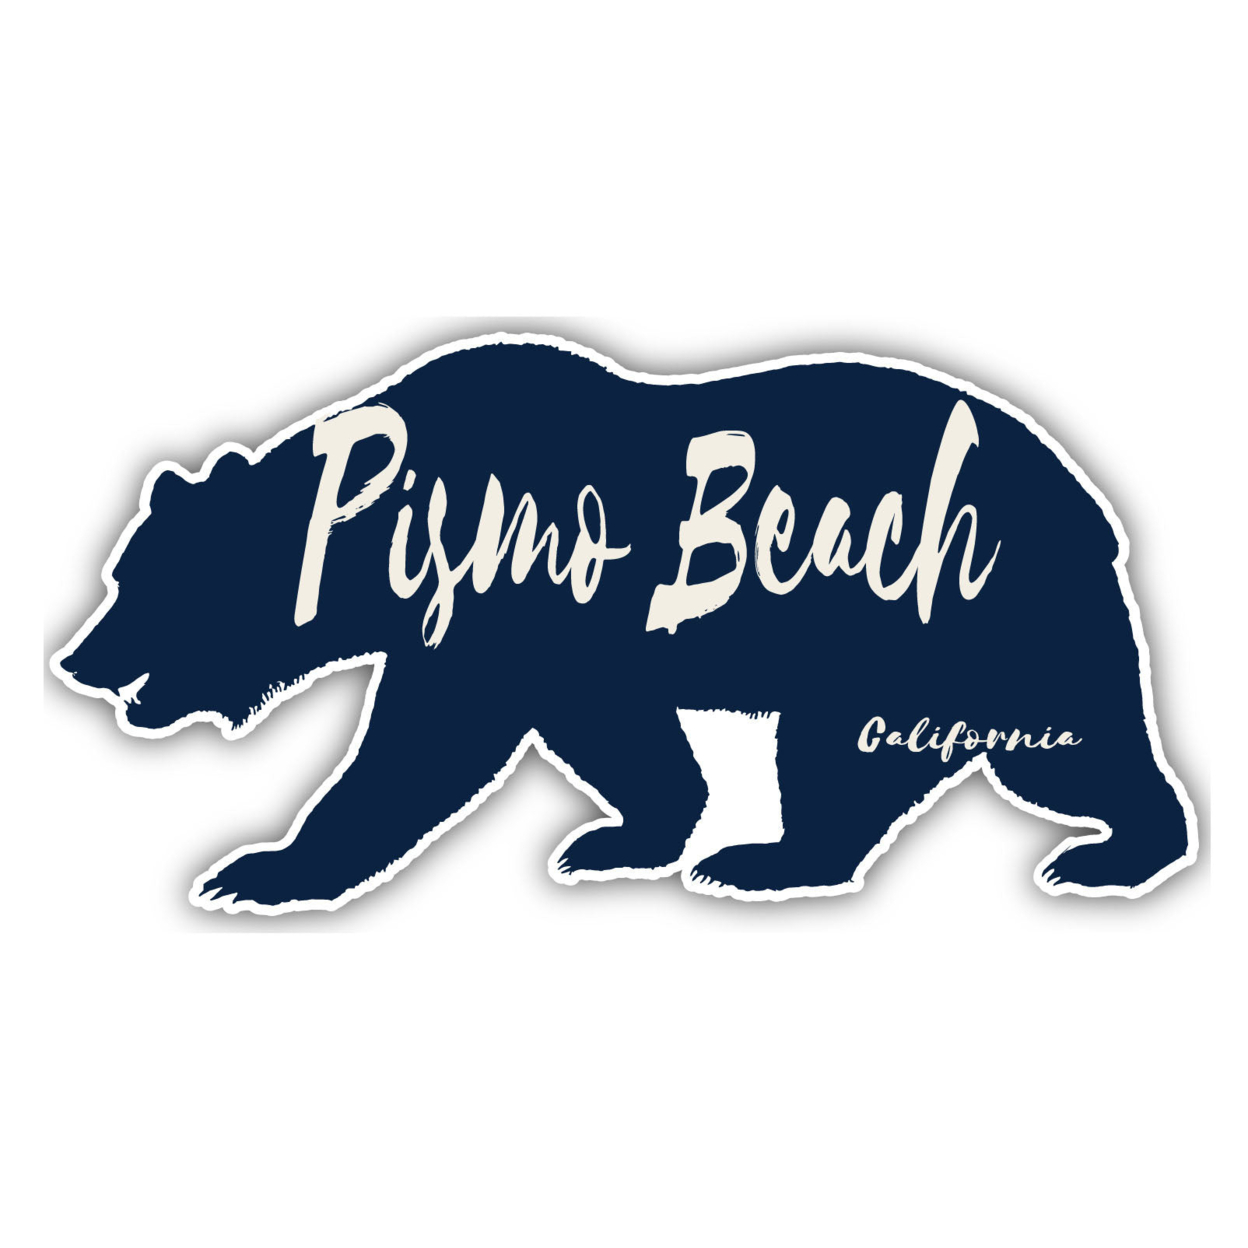 Pismo Beach California Souvenir Decorative Stickers (Choose Theme And Size) - Single Unit, 2-Inch, Bear